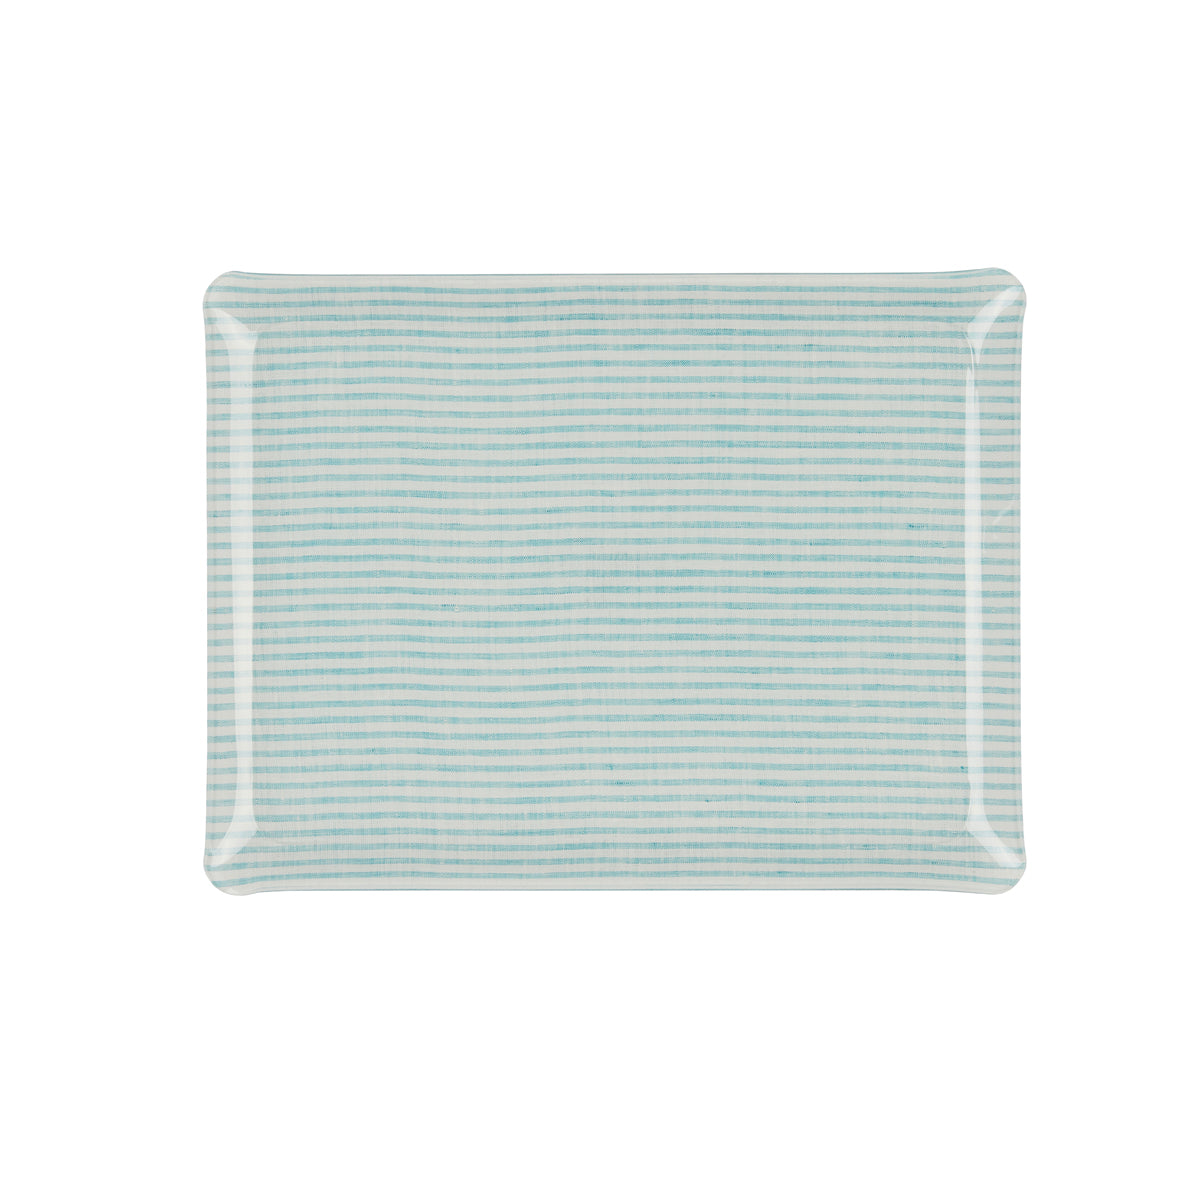 Fabric Tray Medium 37X28 - Stripe Aqua + White